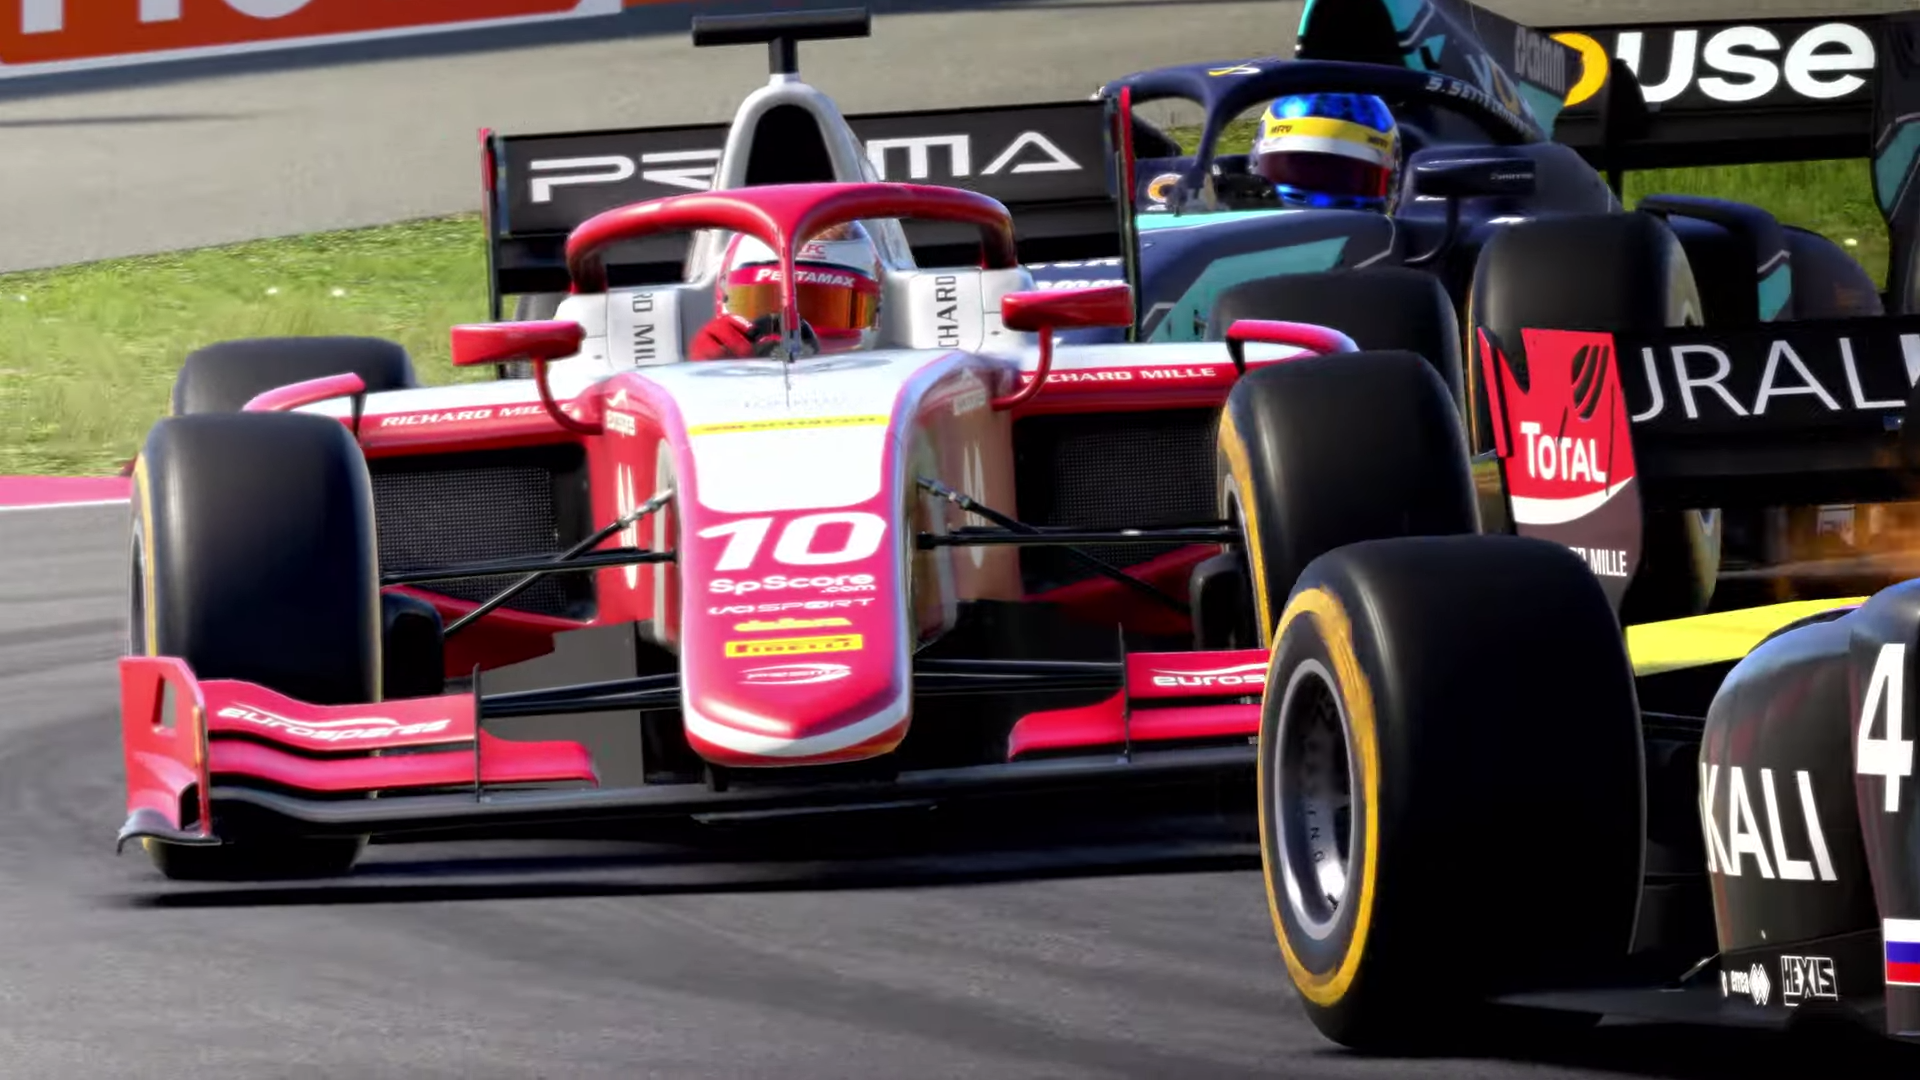 F1 2021 details leaked via Microsoft store | GamesRadar+